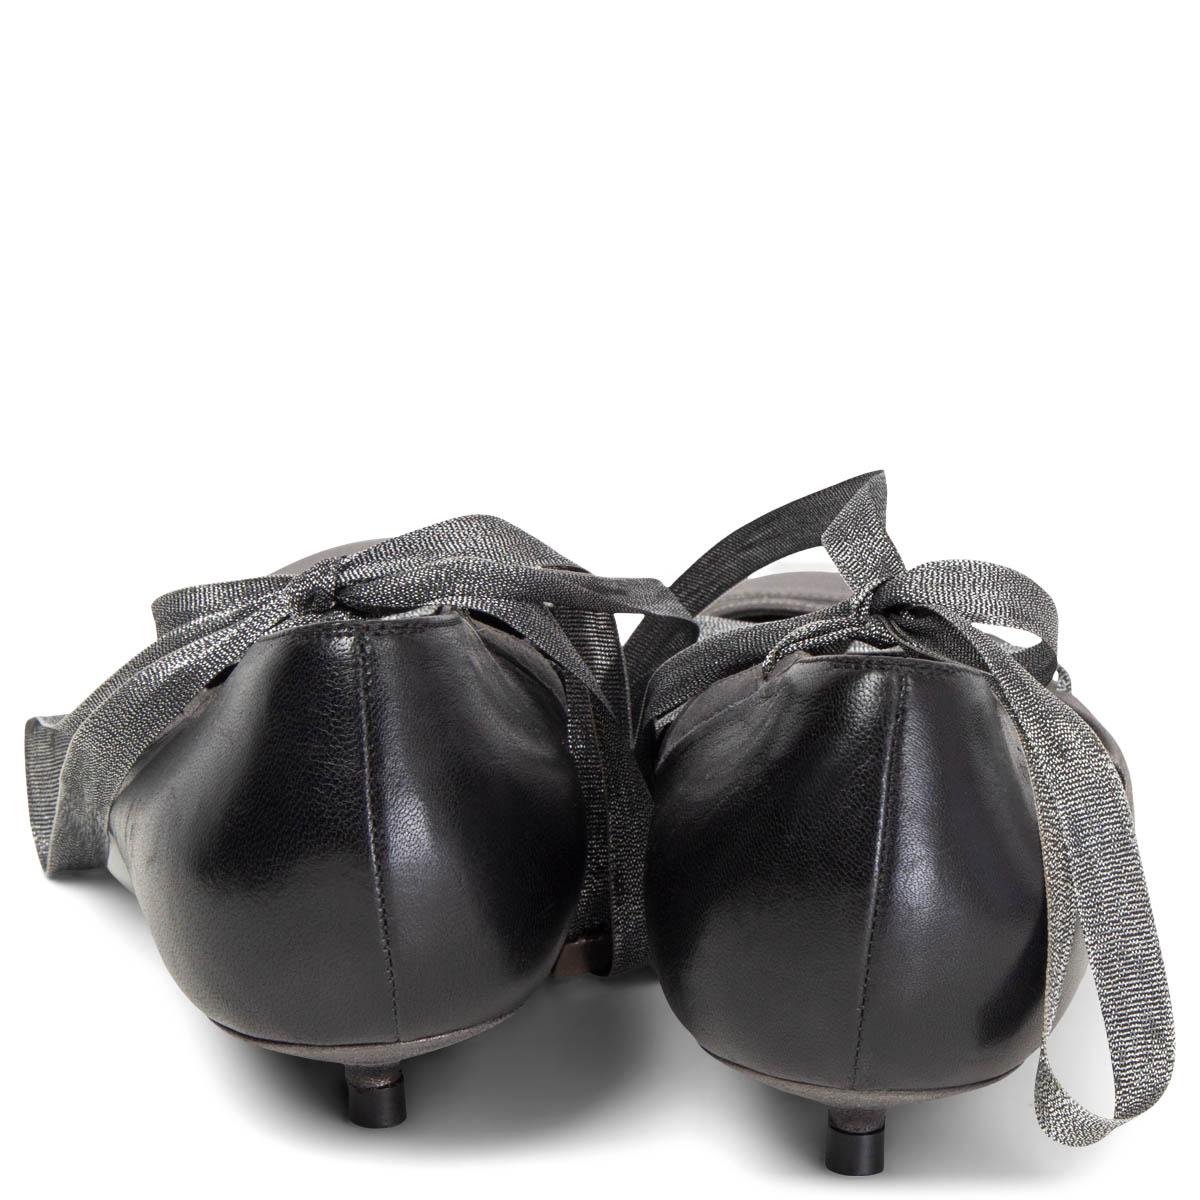 Black CHANEL black & grey leather LACE UP BALLET Pumps Shoes 37